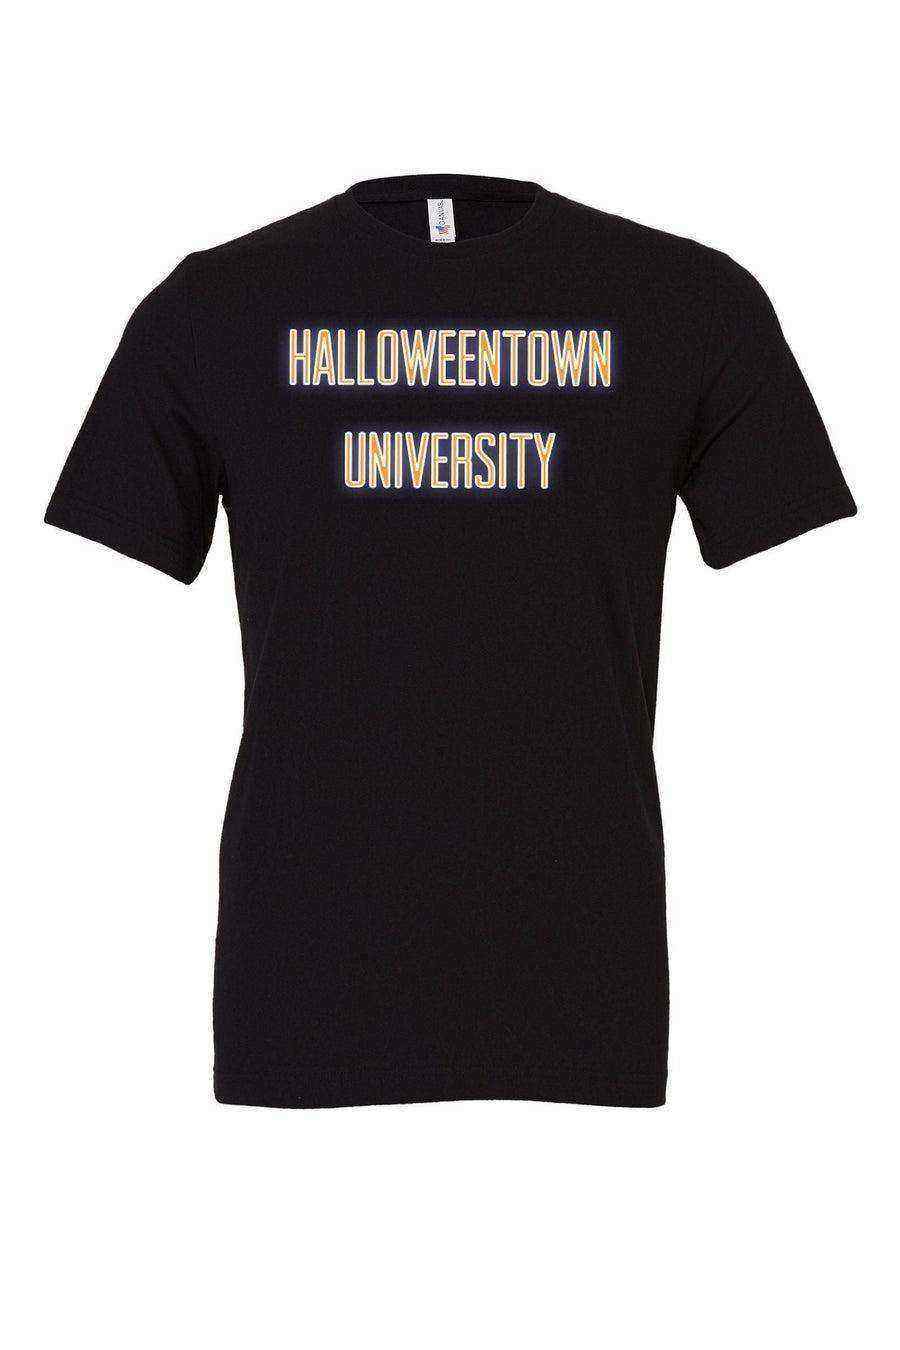 Halloweentown University Shirt | Halloweentown Shirt - Dylan's Tees